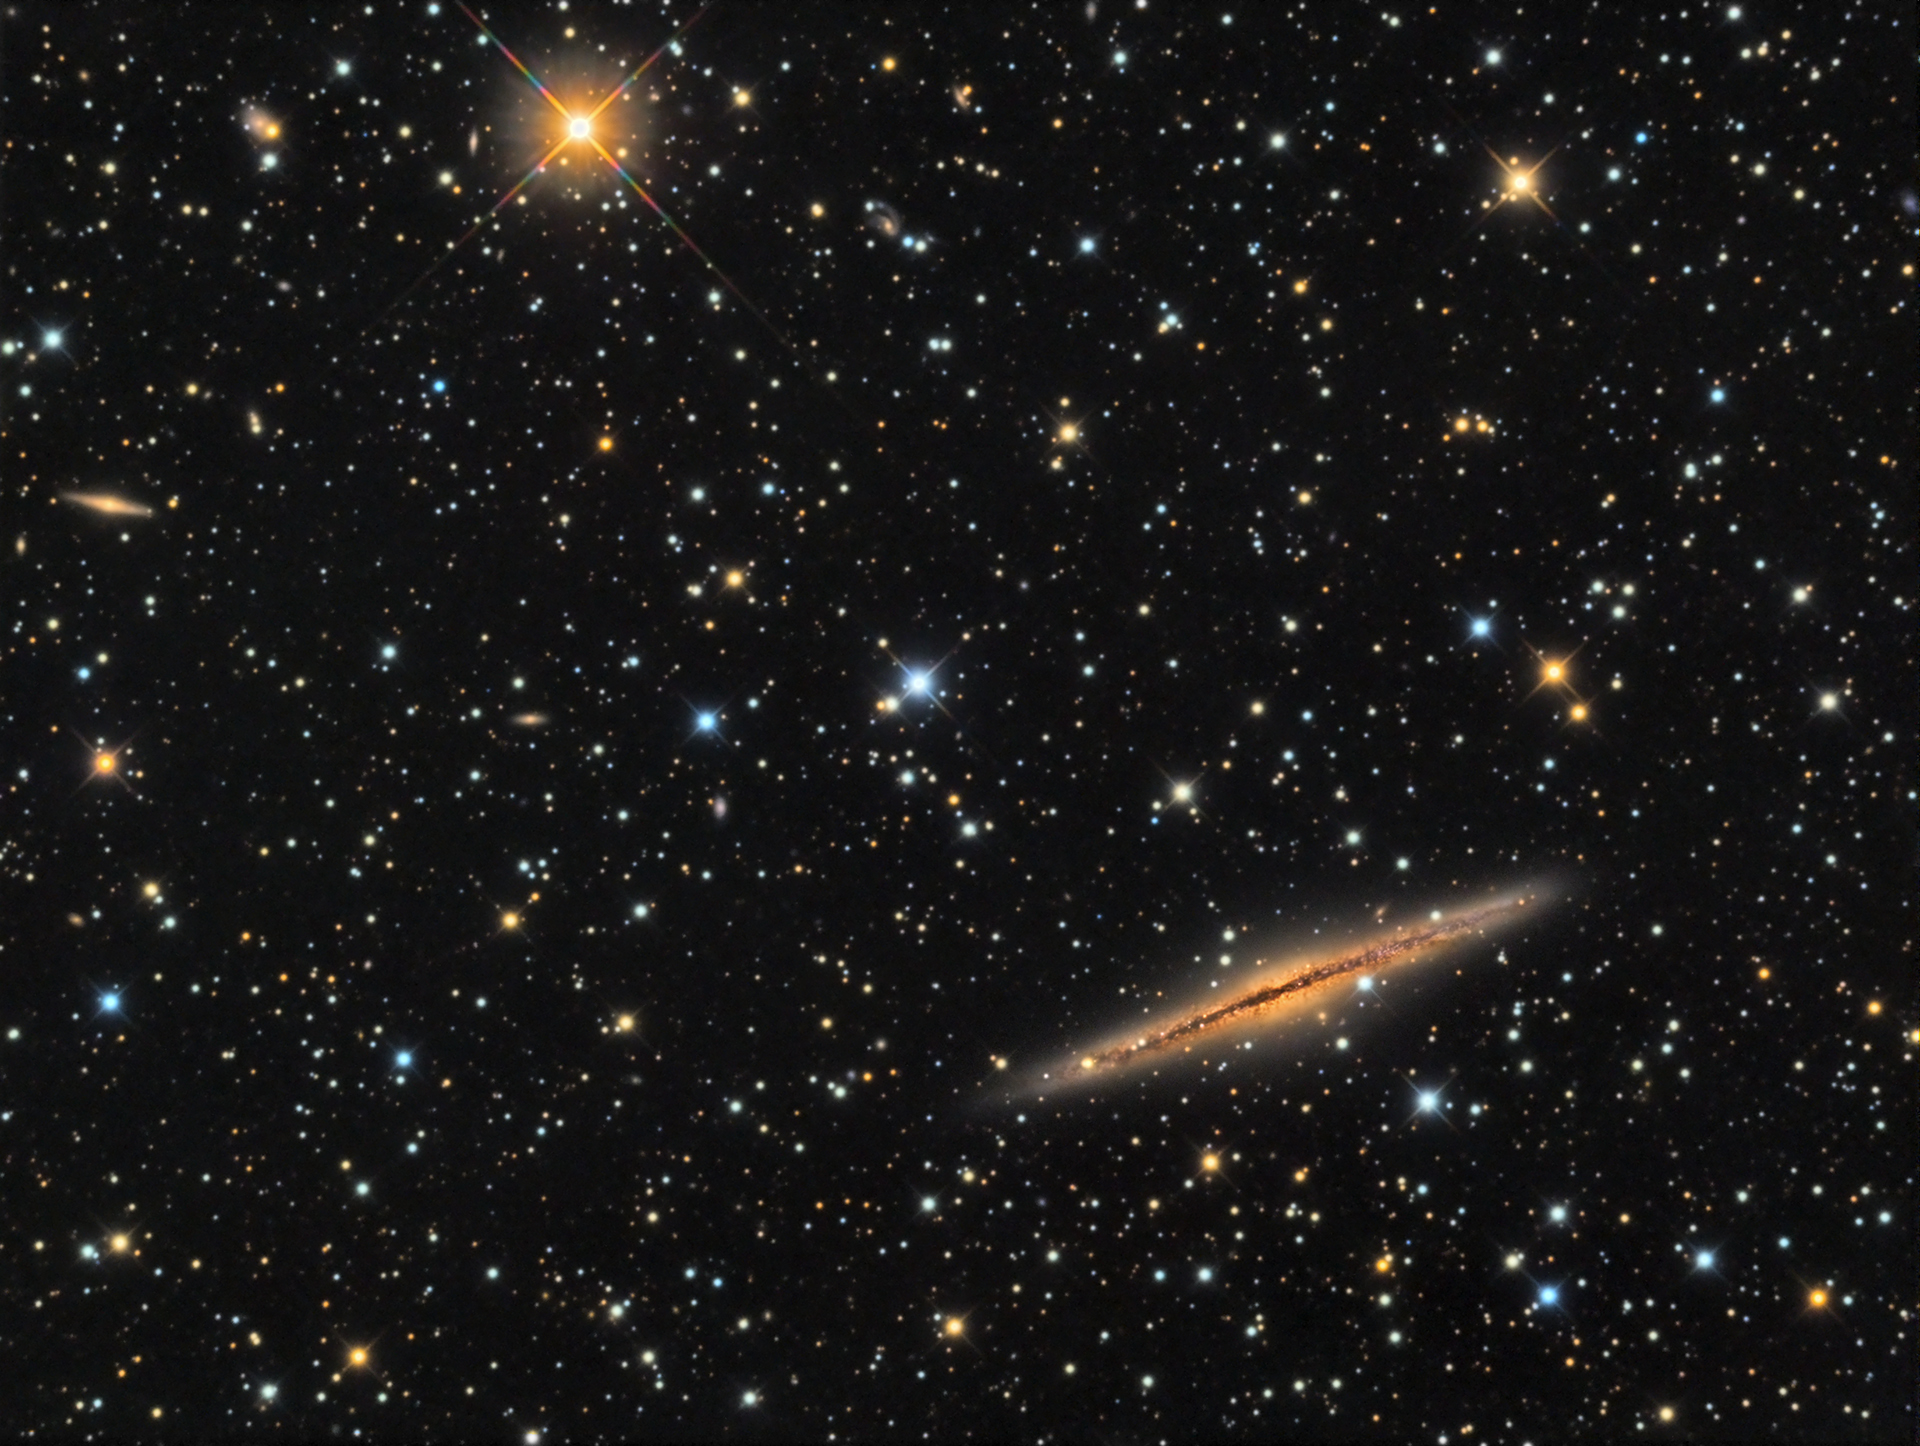 NGC_891_LRGB-16_crop_WEB.jpg